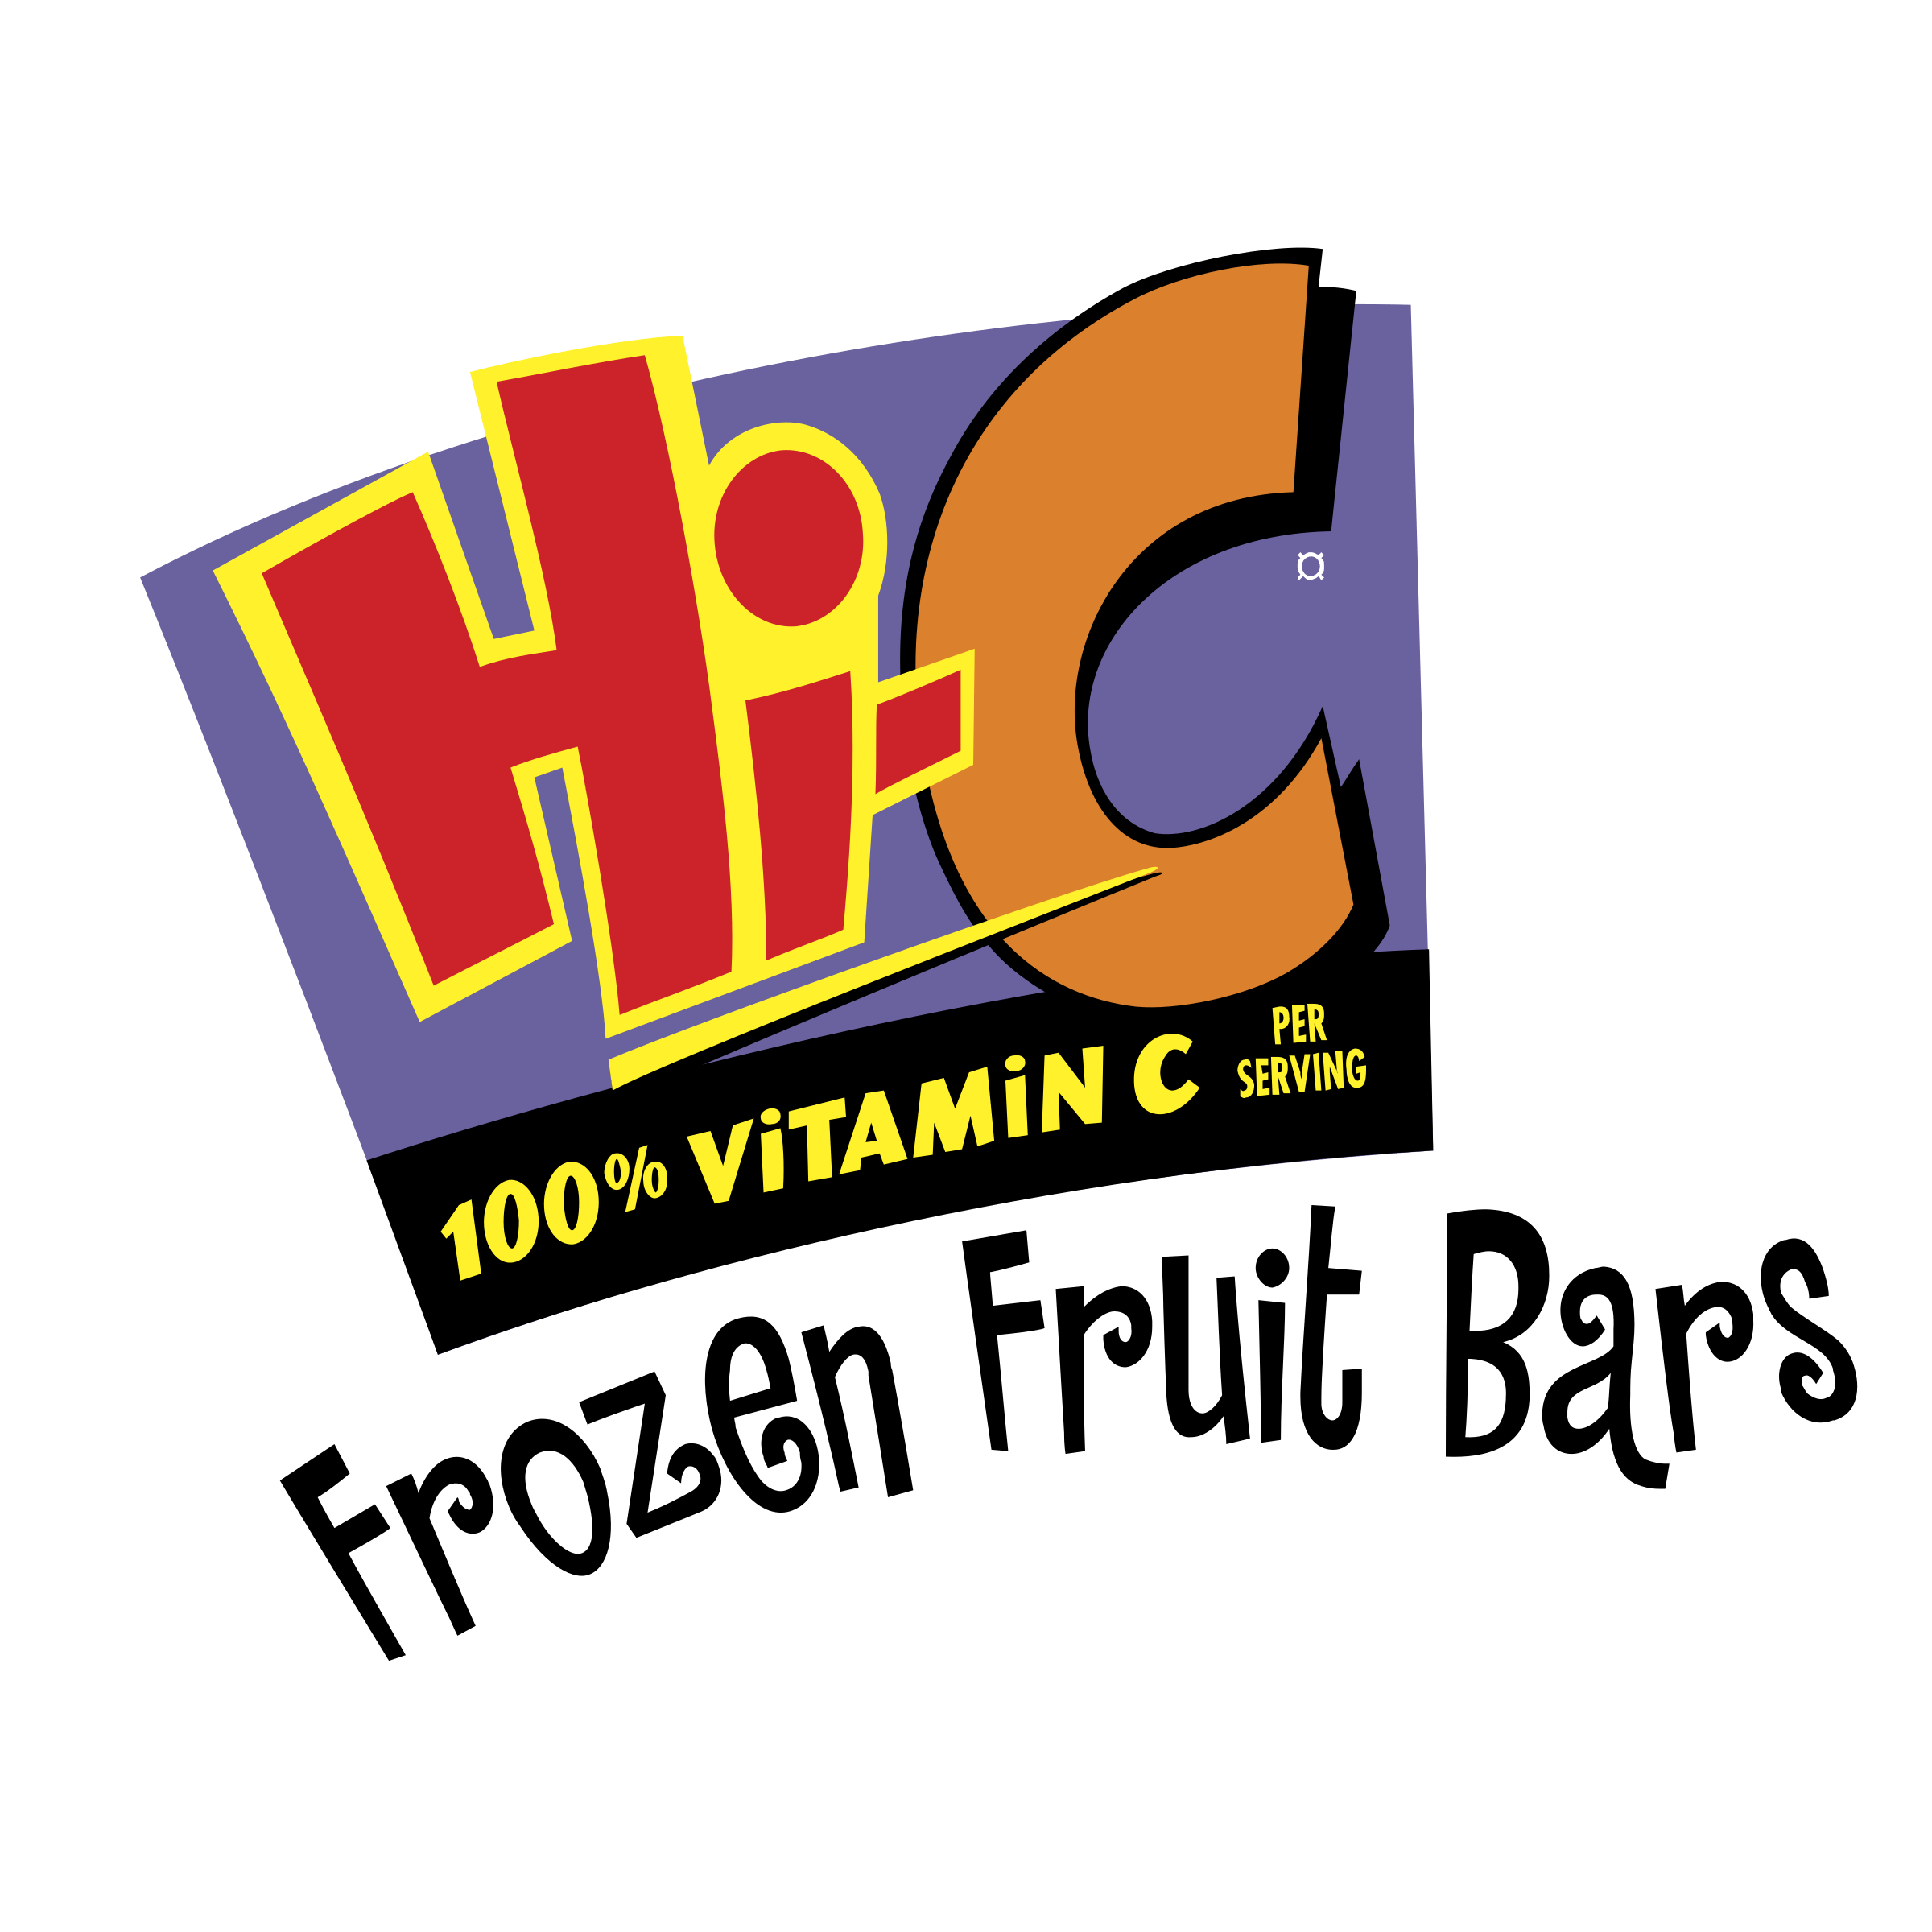 Hi-C Logo - Hi C Frozen Fruit Bars Logo PNG Transparent & SVG Vector - Freebie ...